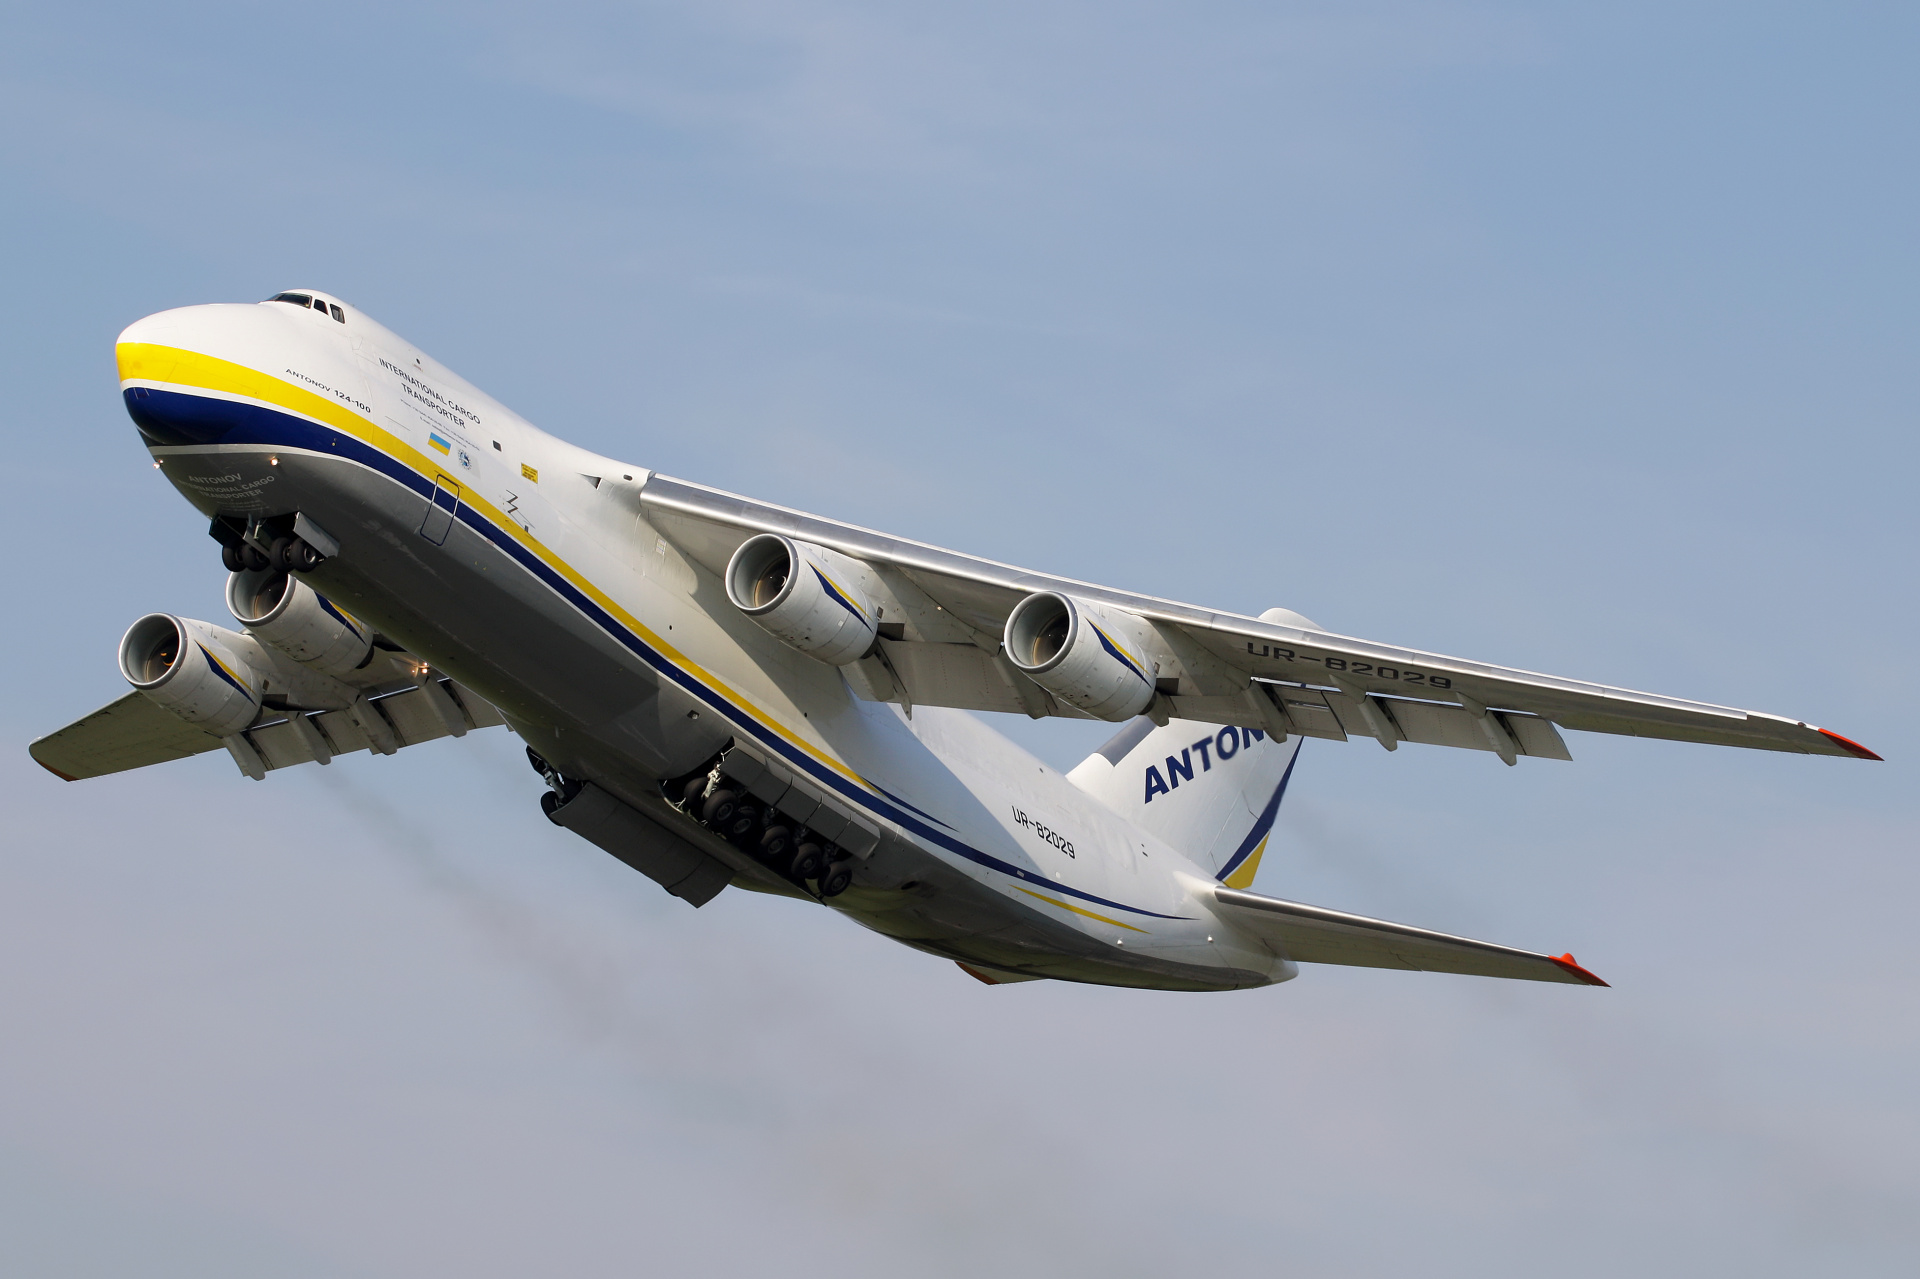 UR-82029 (new livery) (Aircraft » EPWA Spotting » Antonov An-124-100 Ruslan » Antonov Airlines)